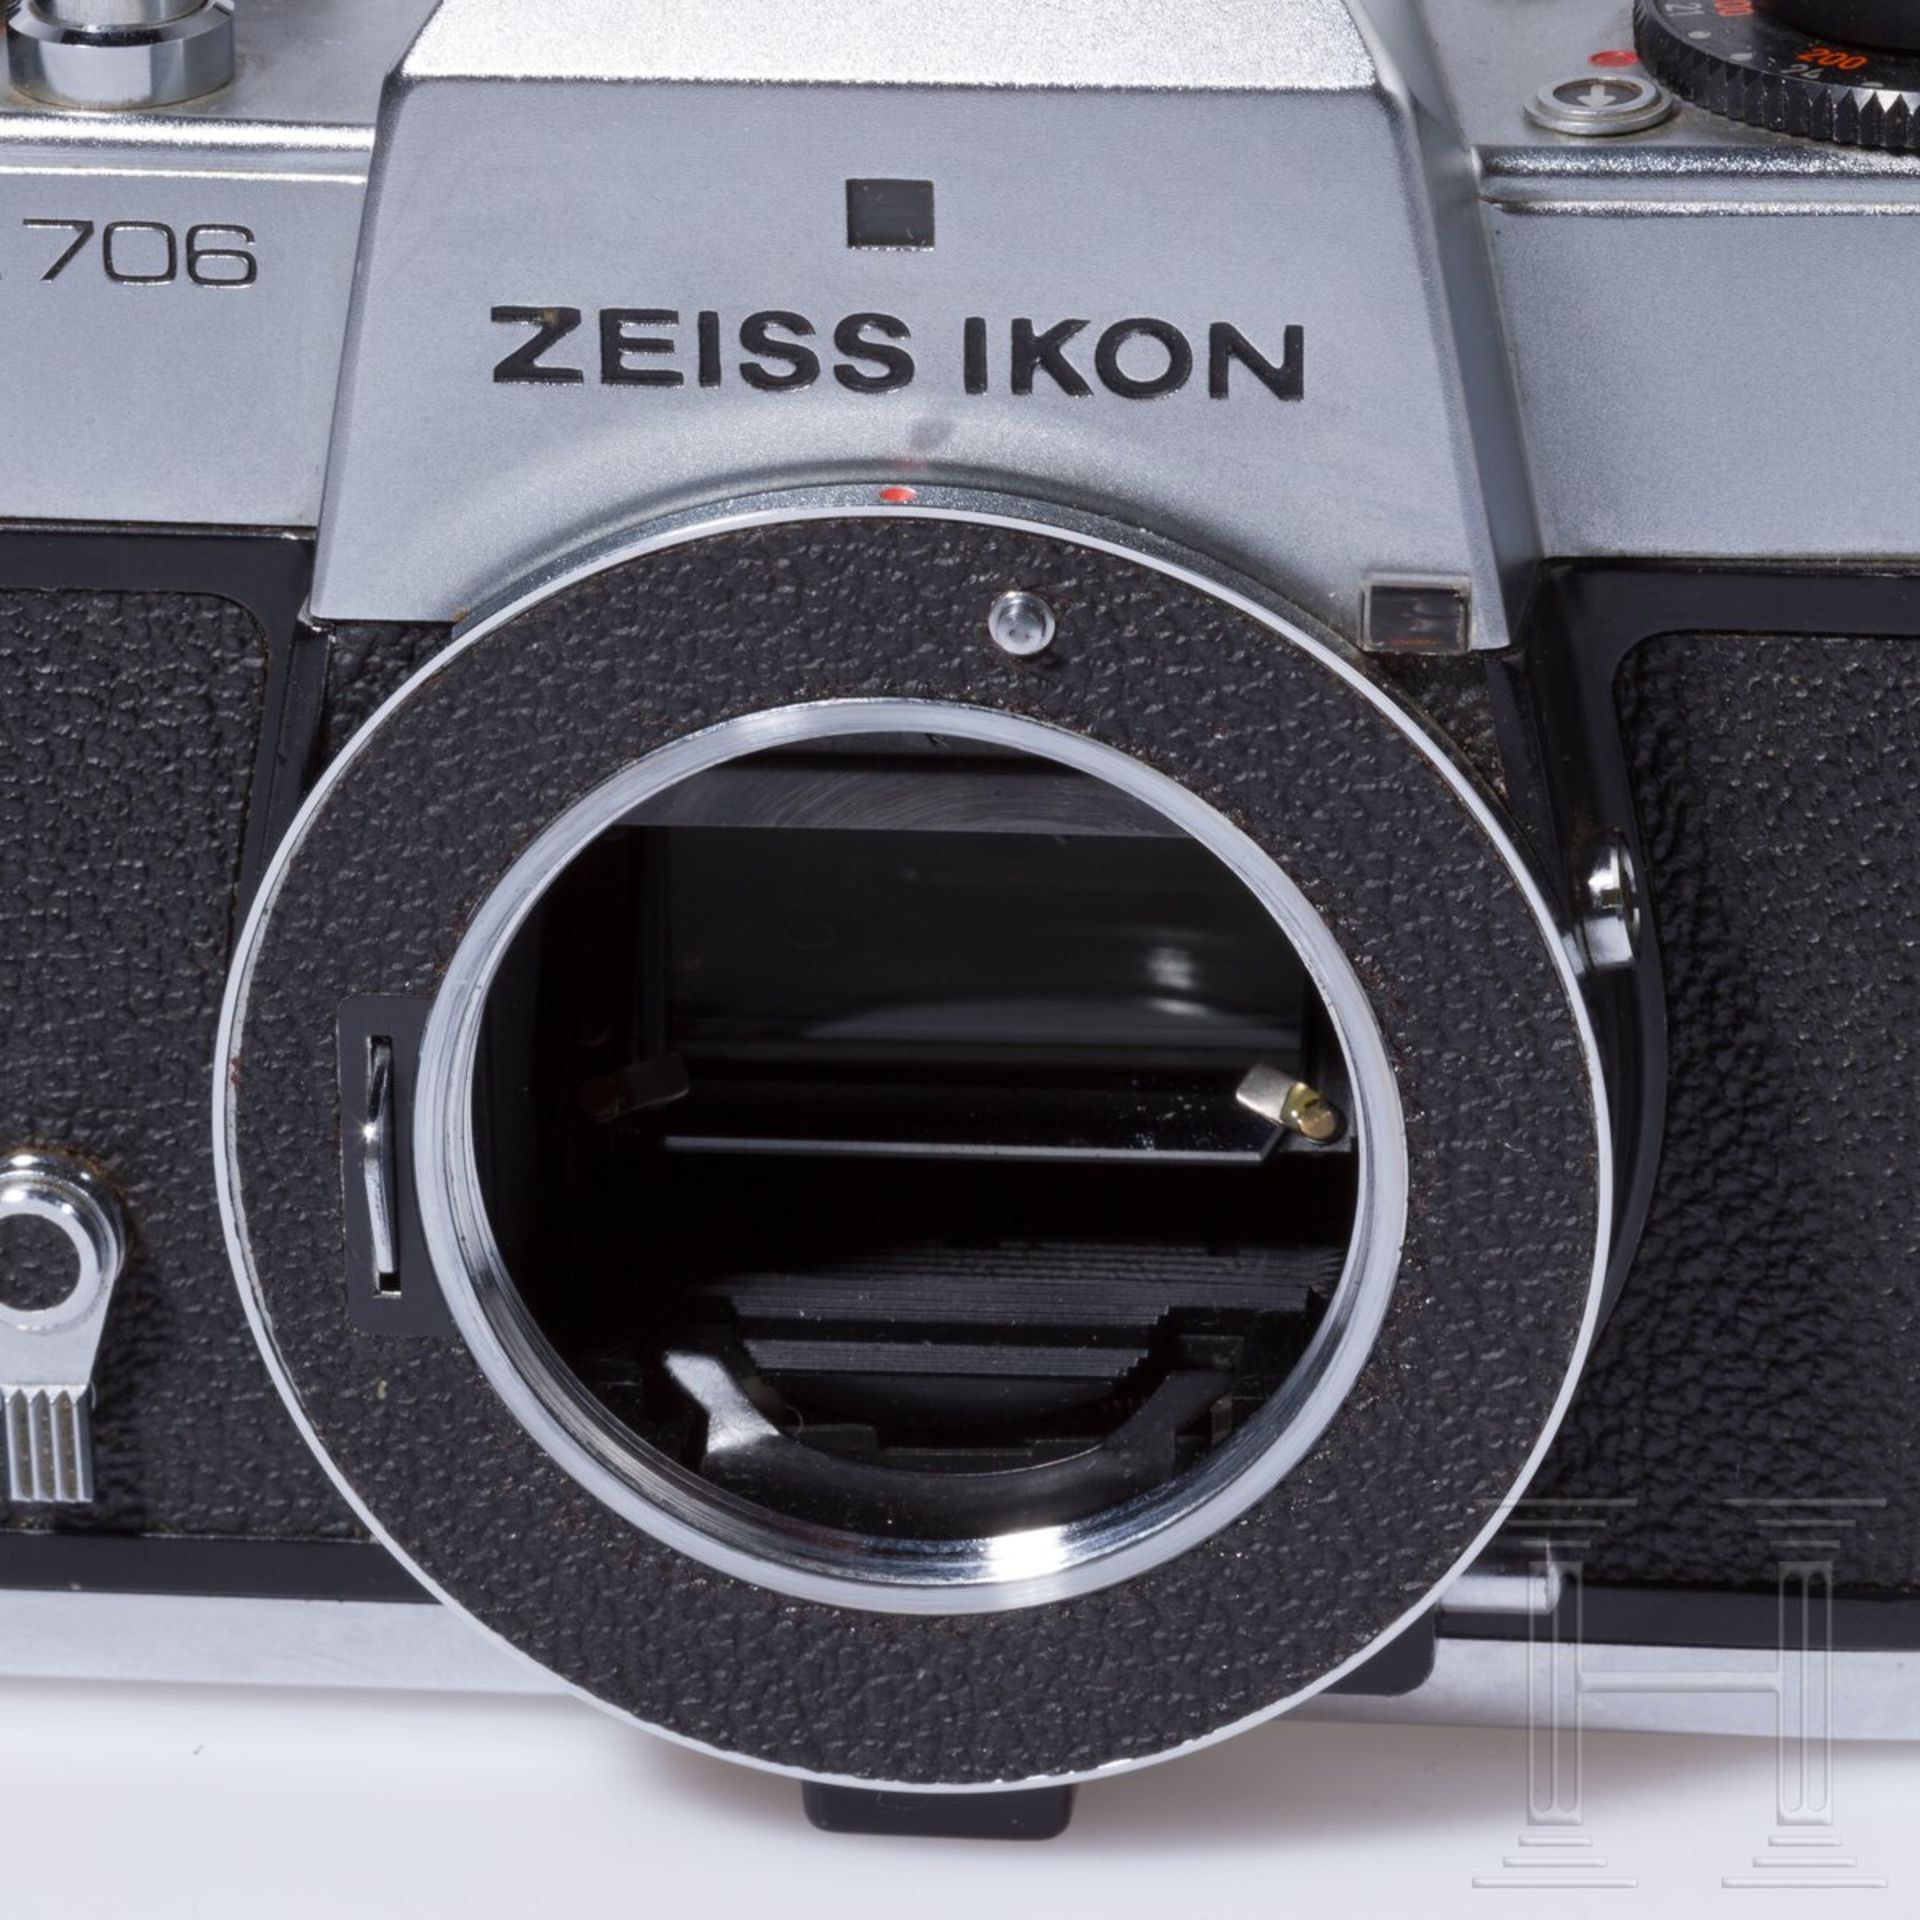 Zeiss Ikon SL 706 mit Carl Zeiss Tessar 50 mm, Skoparex 35 mm, Super-Dynarex 135 mm - Image 7 of 11